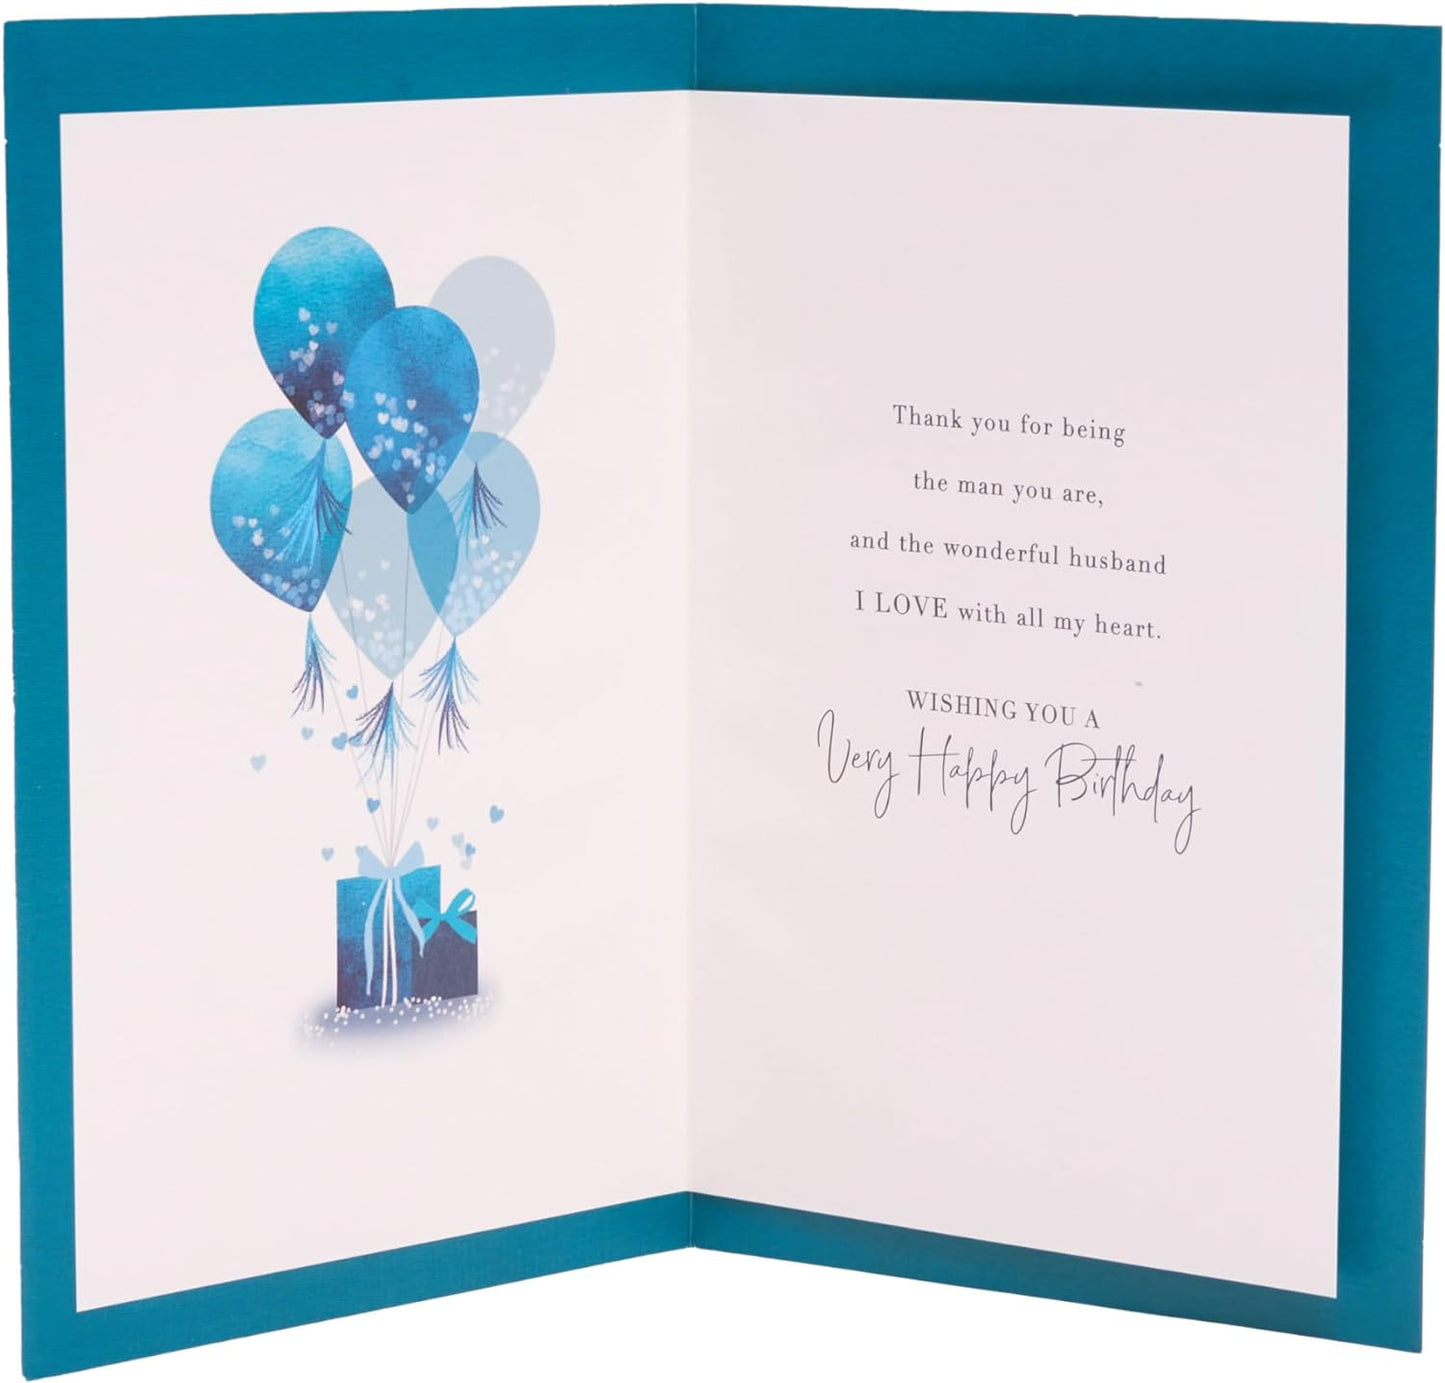 Husband Birthday Card Blue Heart Design 